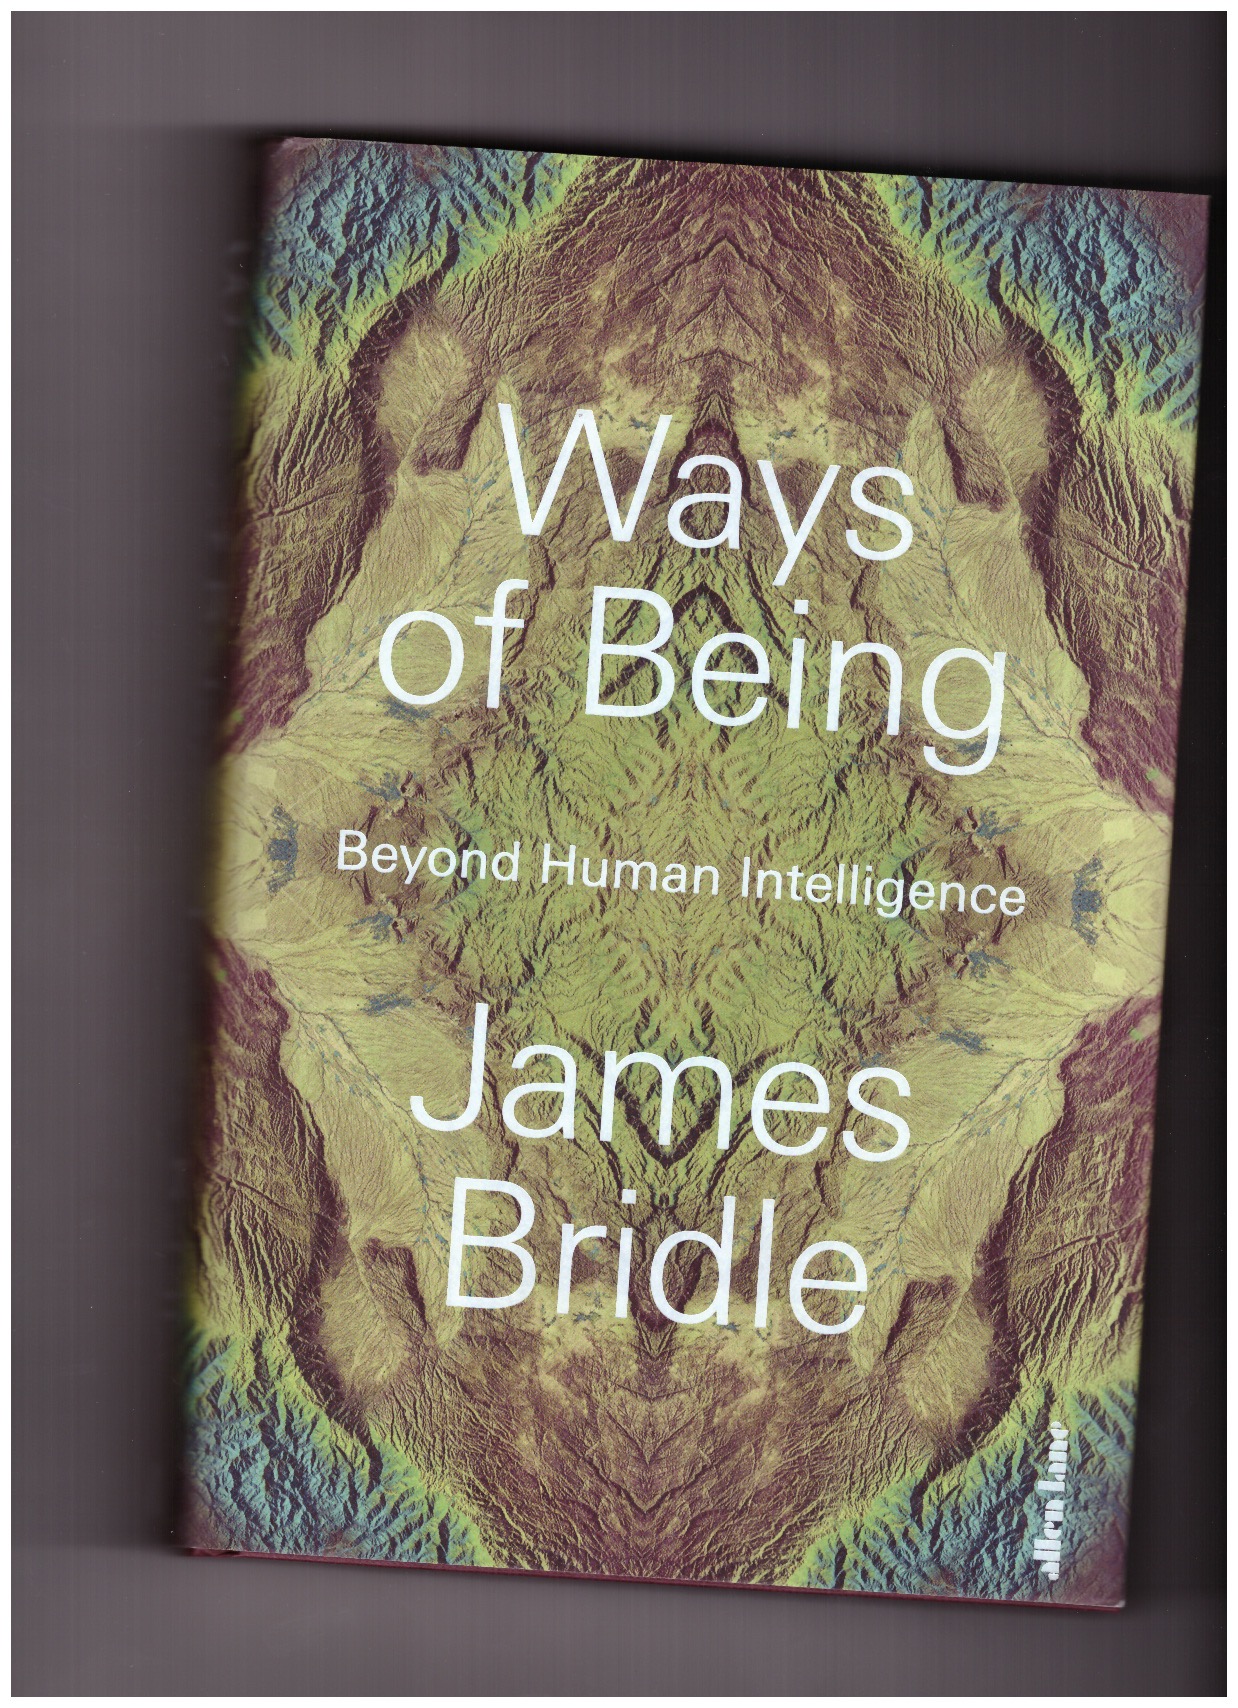 BRIDLE, James - Ways of Being